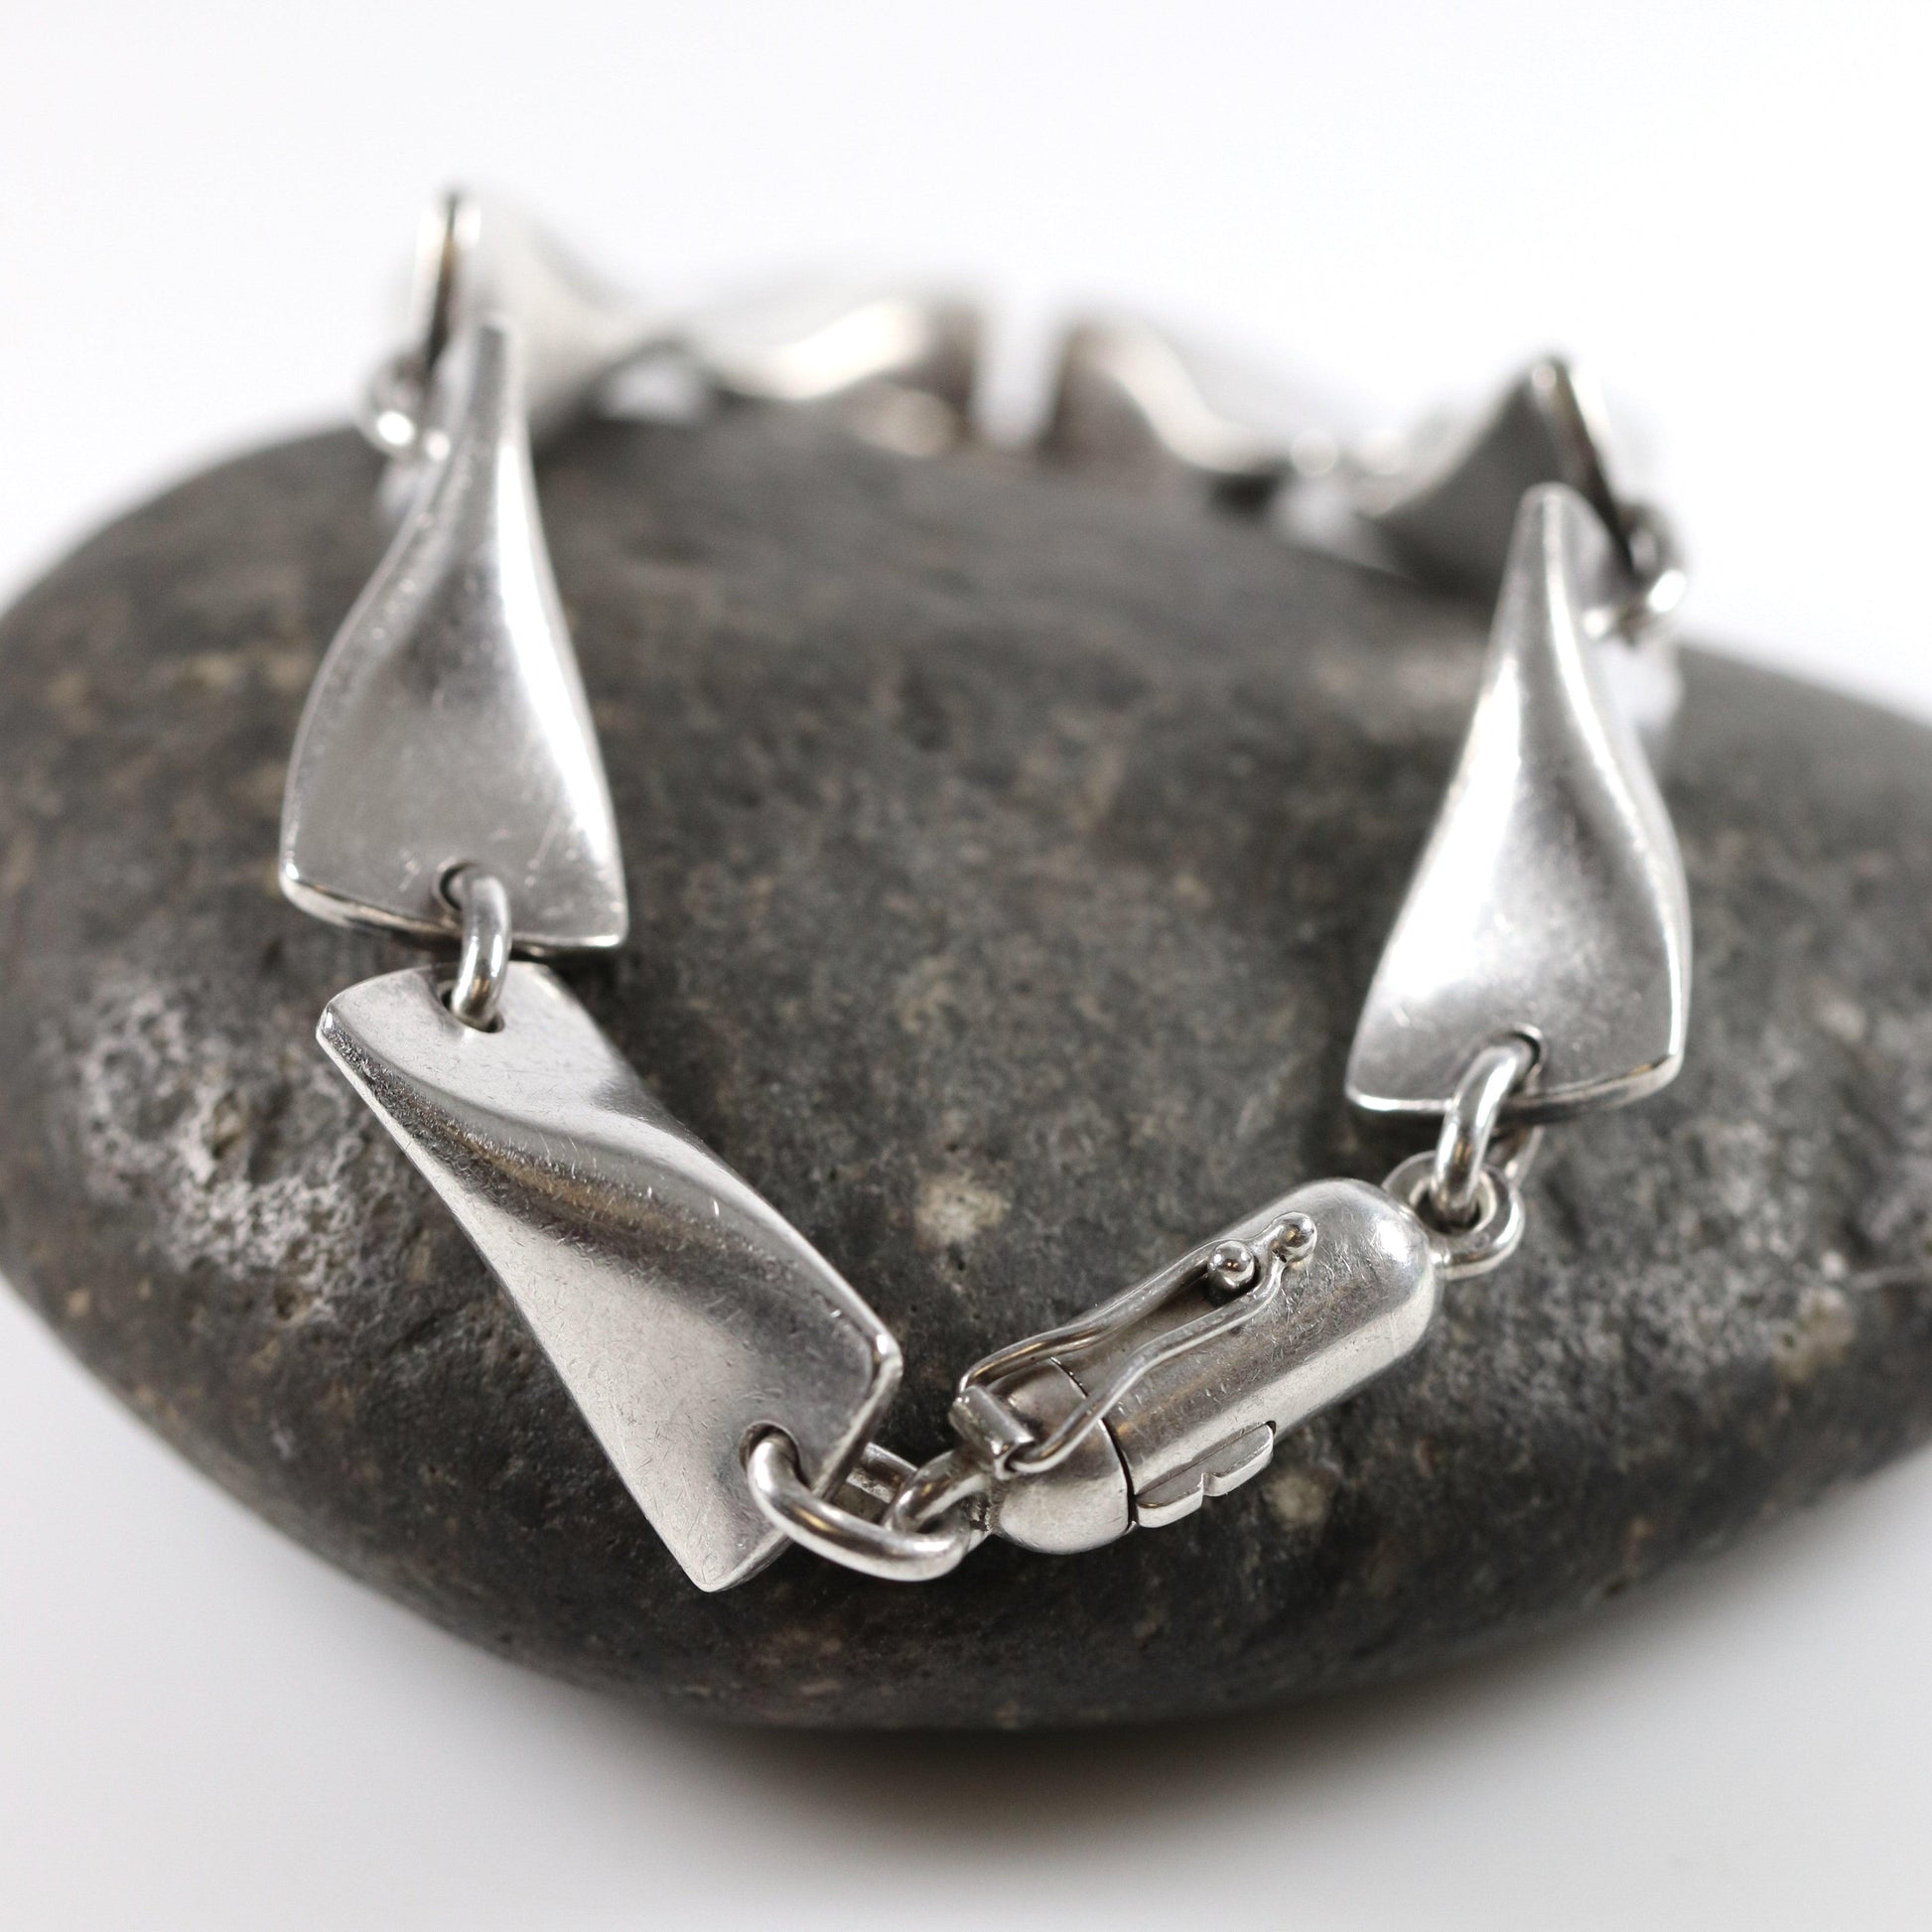 Vintage Georg Jensen Jewelry | Edvard Kindt-Larson Butterfly Modernist Bracelet 104B - Carmel Fine Silver Jewelry